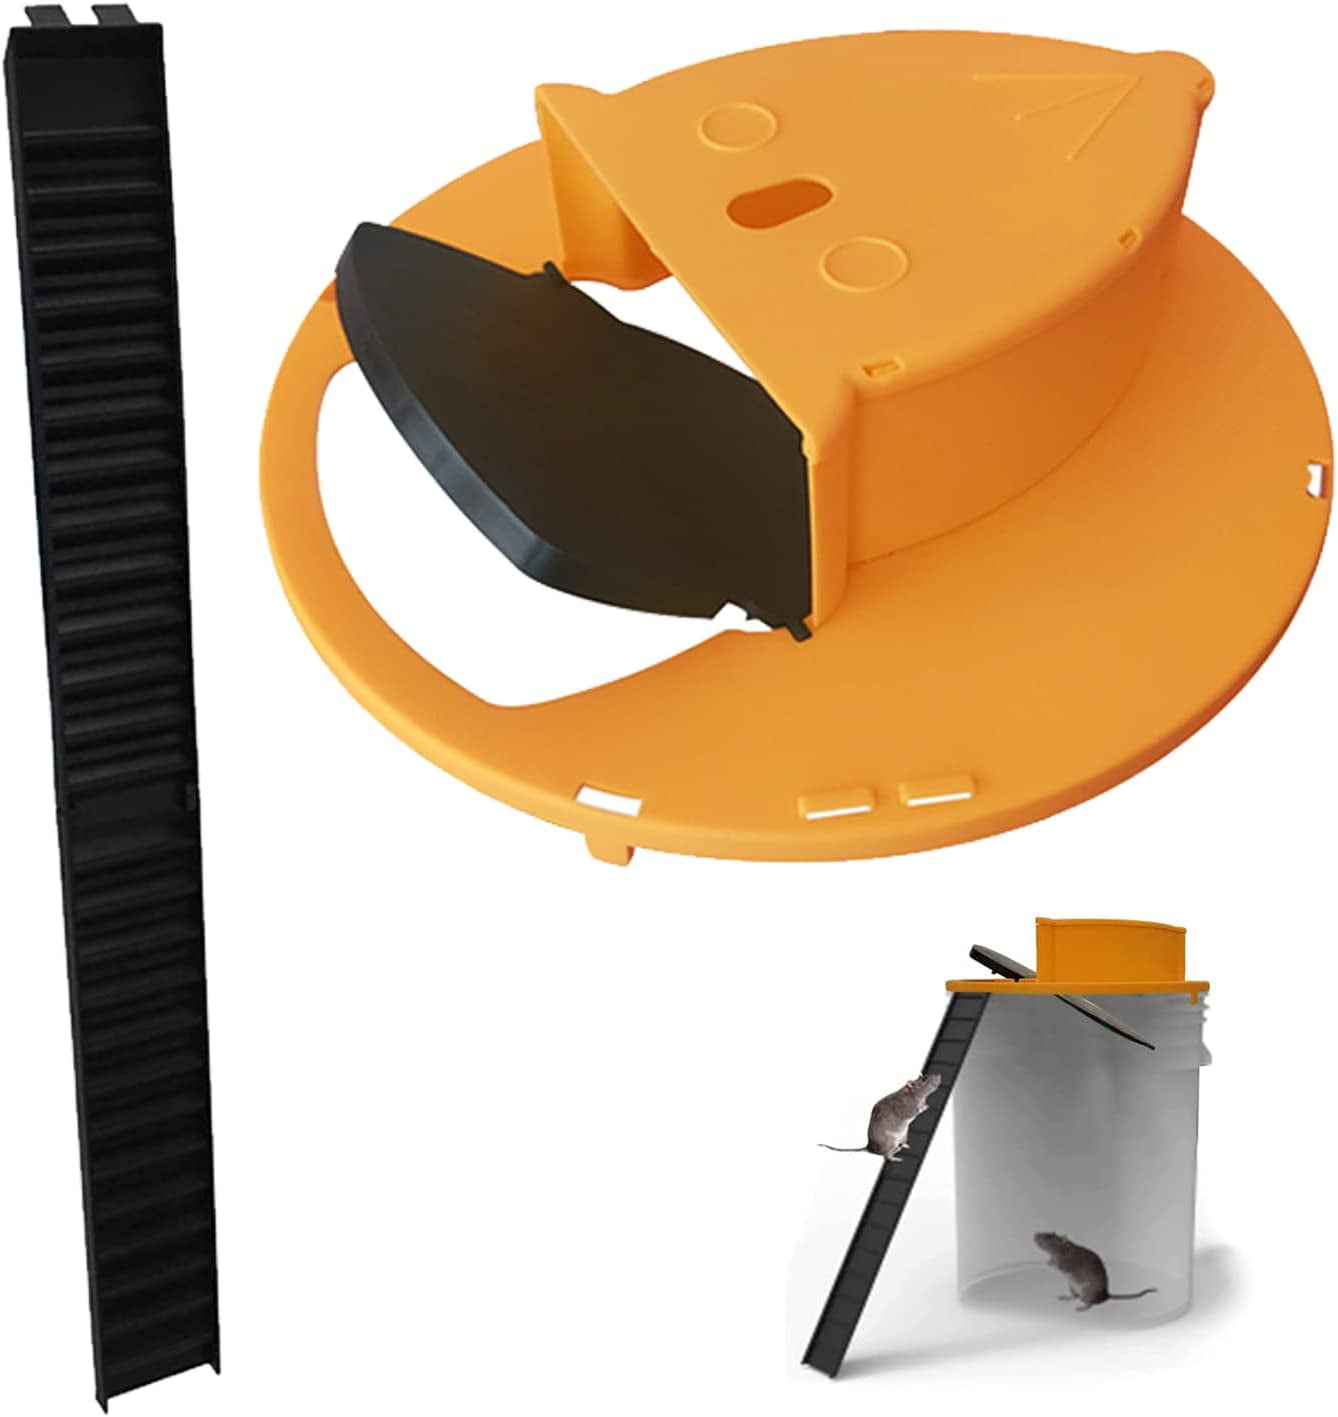 Flip N Slide Bucket Lid Mouse Trap - 860007330100